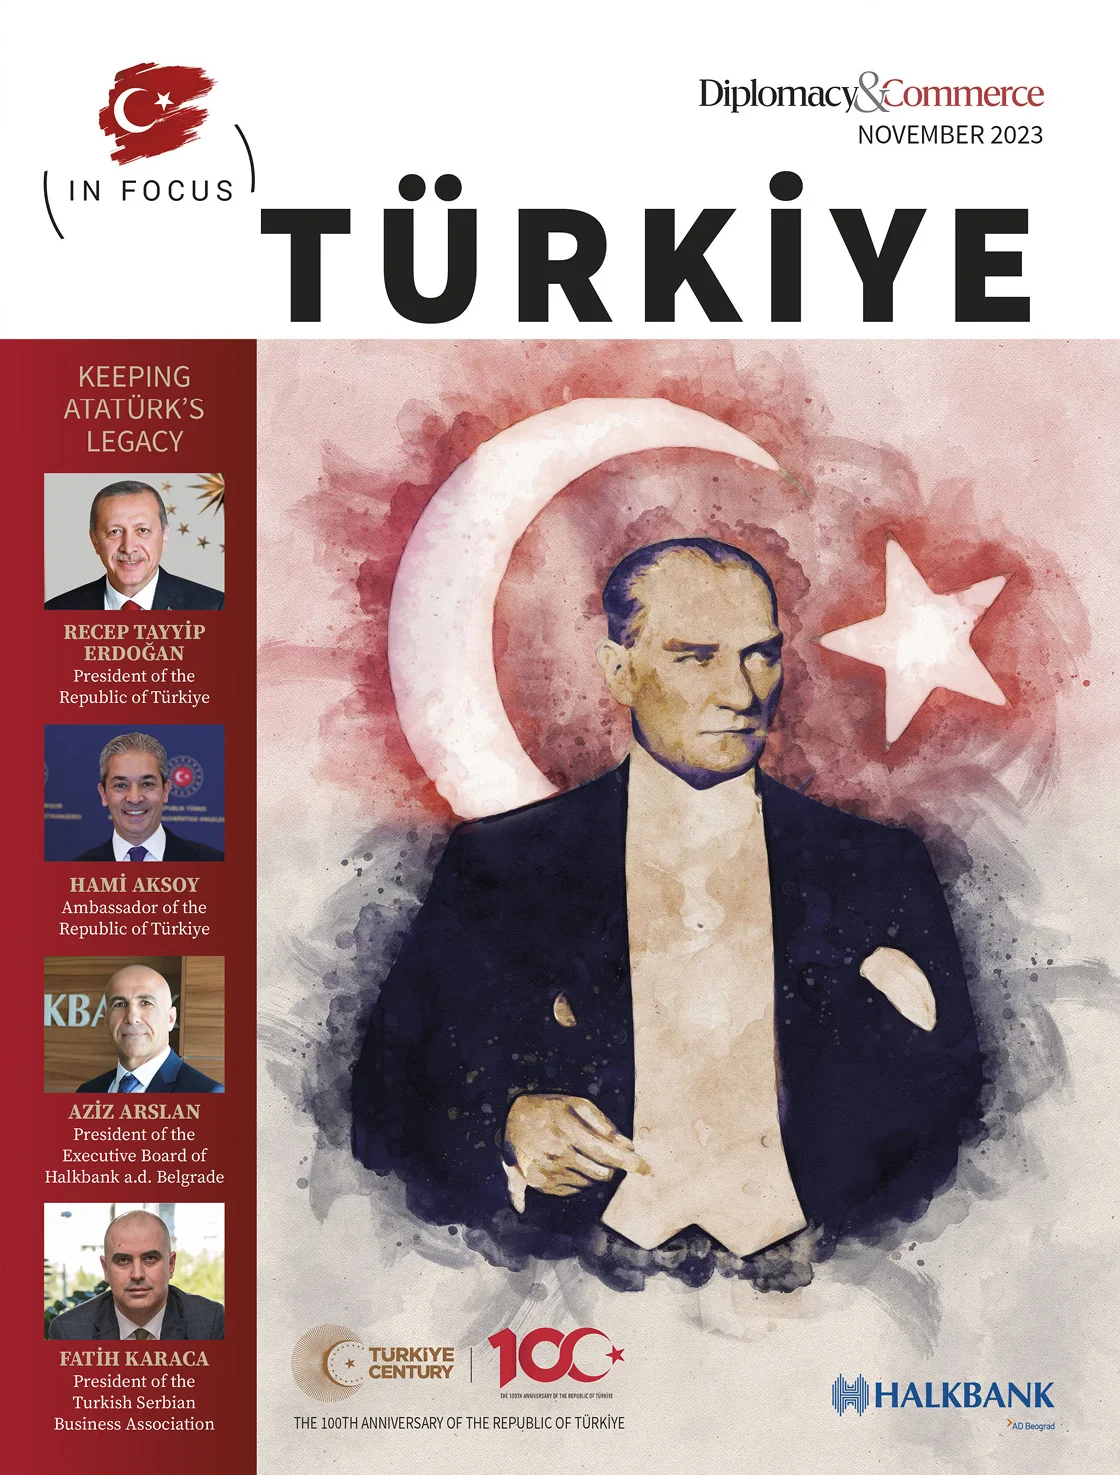 DandC - Diplomacy&commerce - In Focus - Turkey 2023 - cover